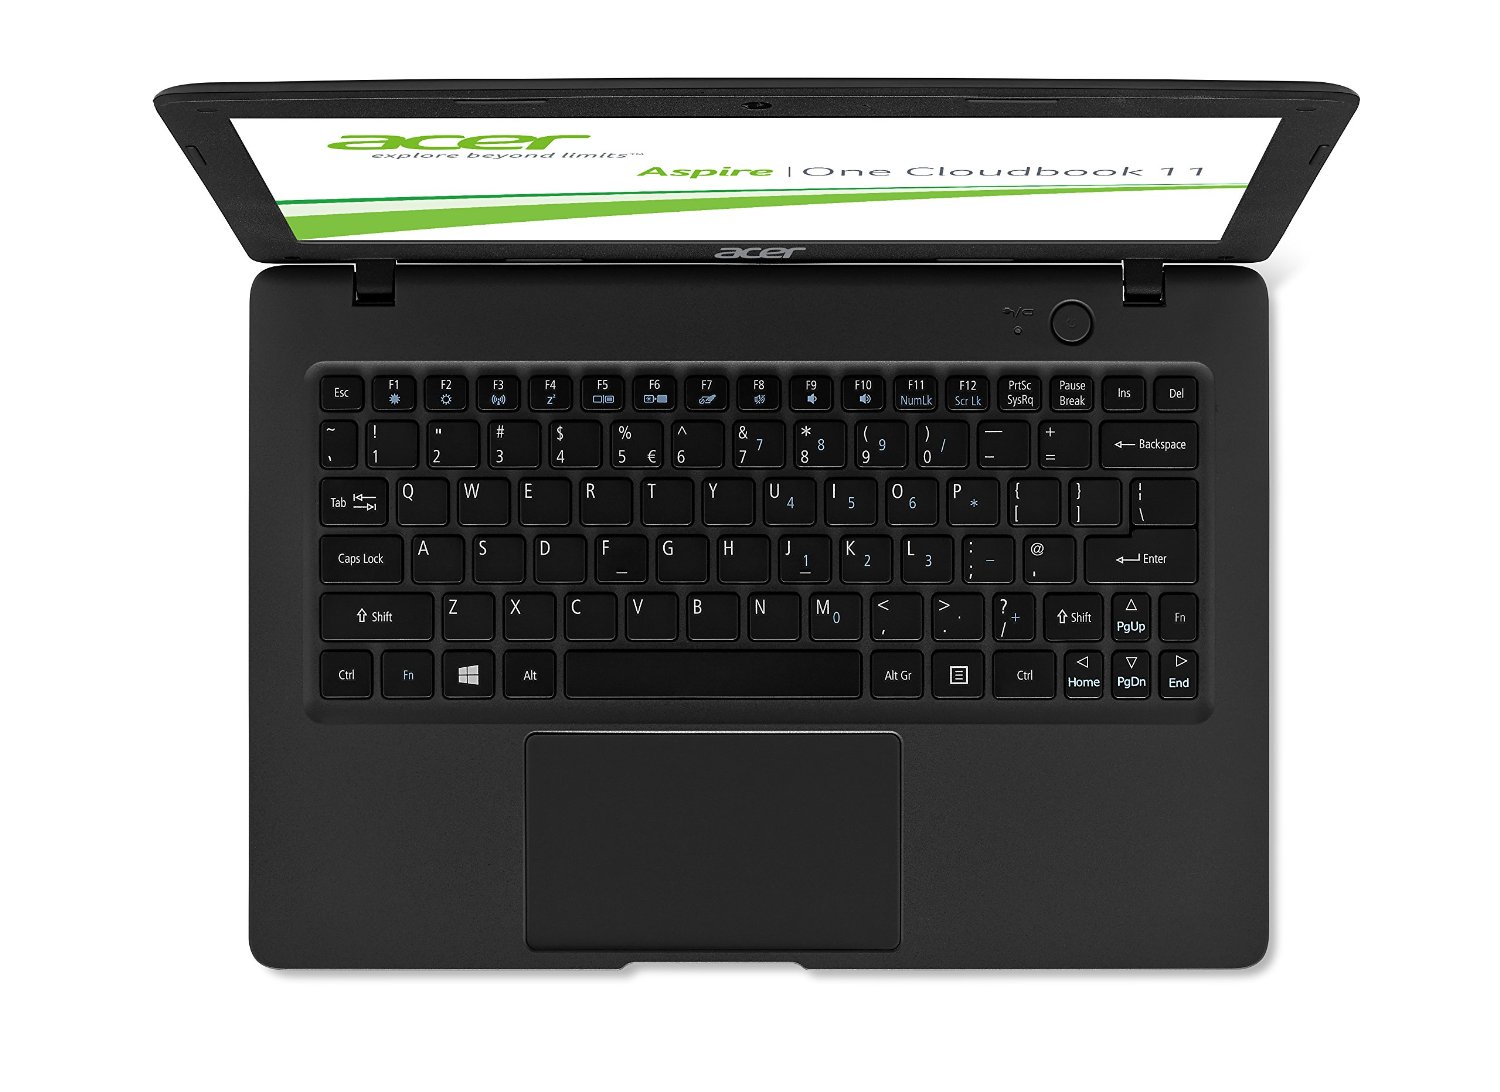 Acer Aspire One Cloudbook 11 Netbook Review - NotebookCheck.net